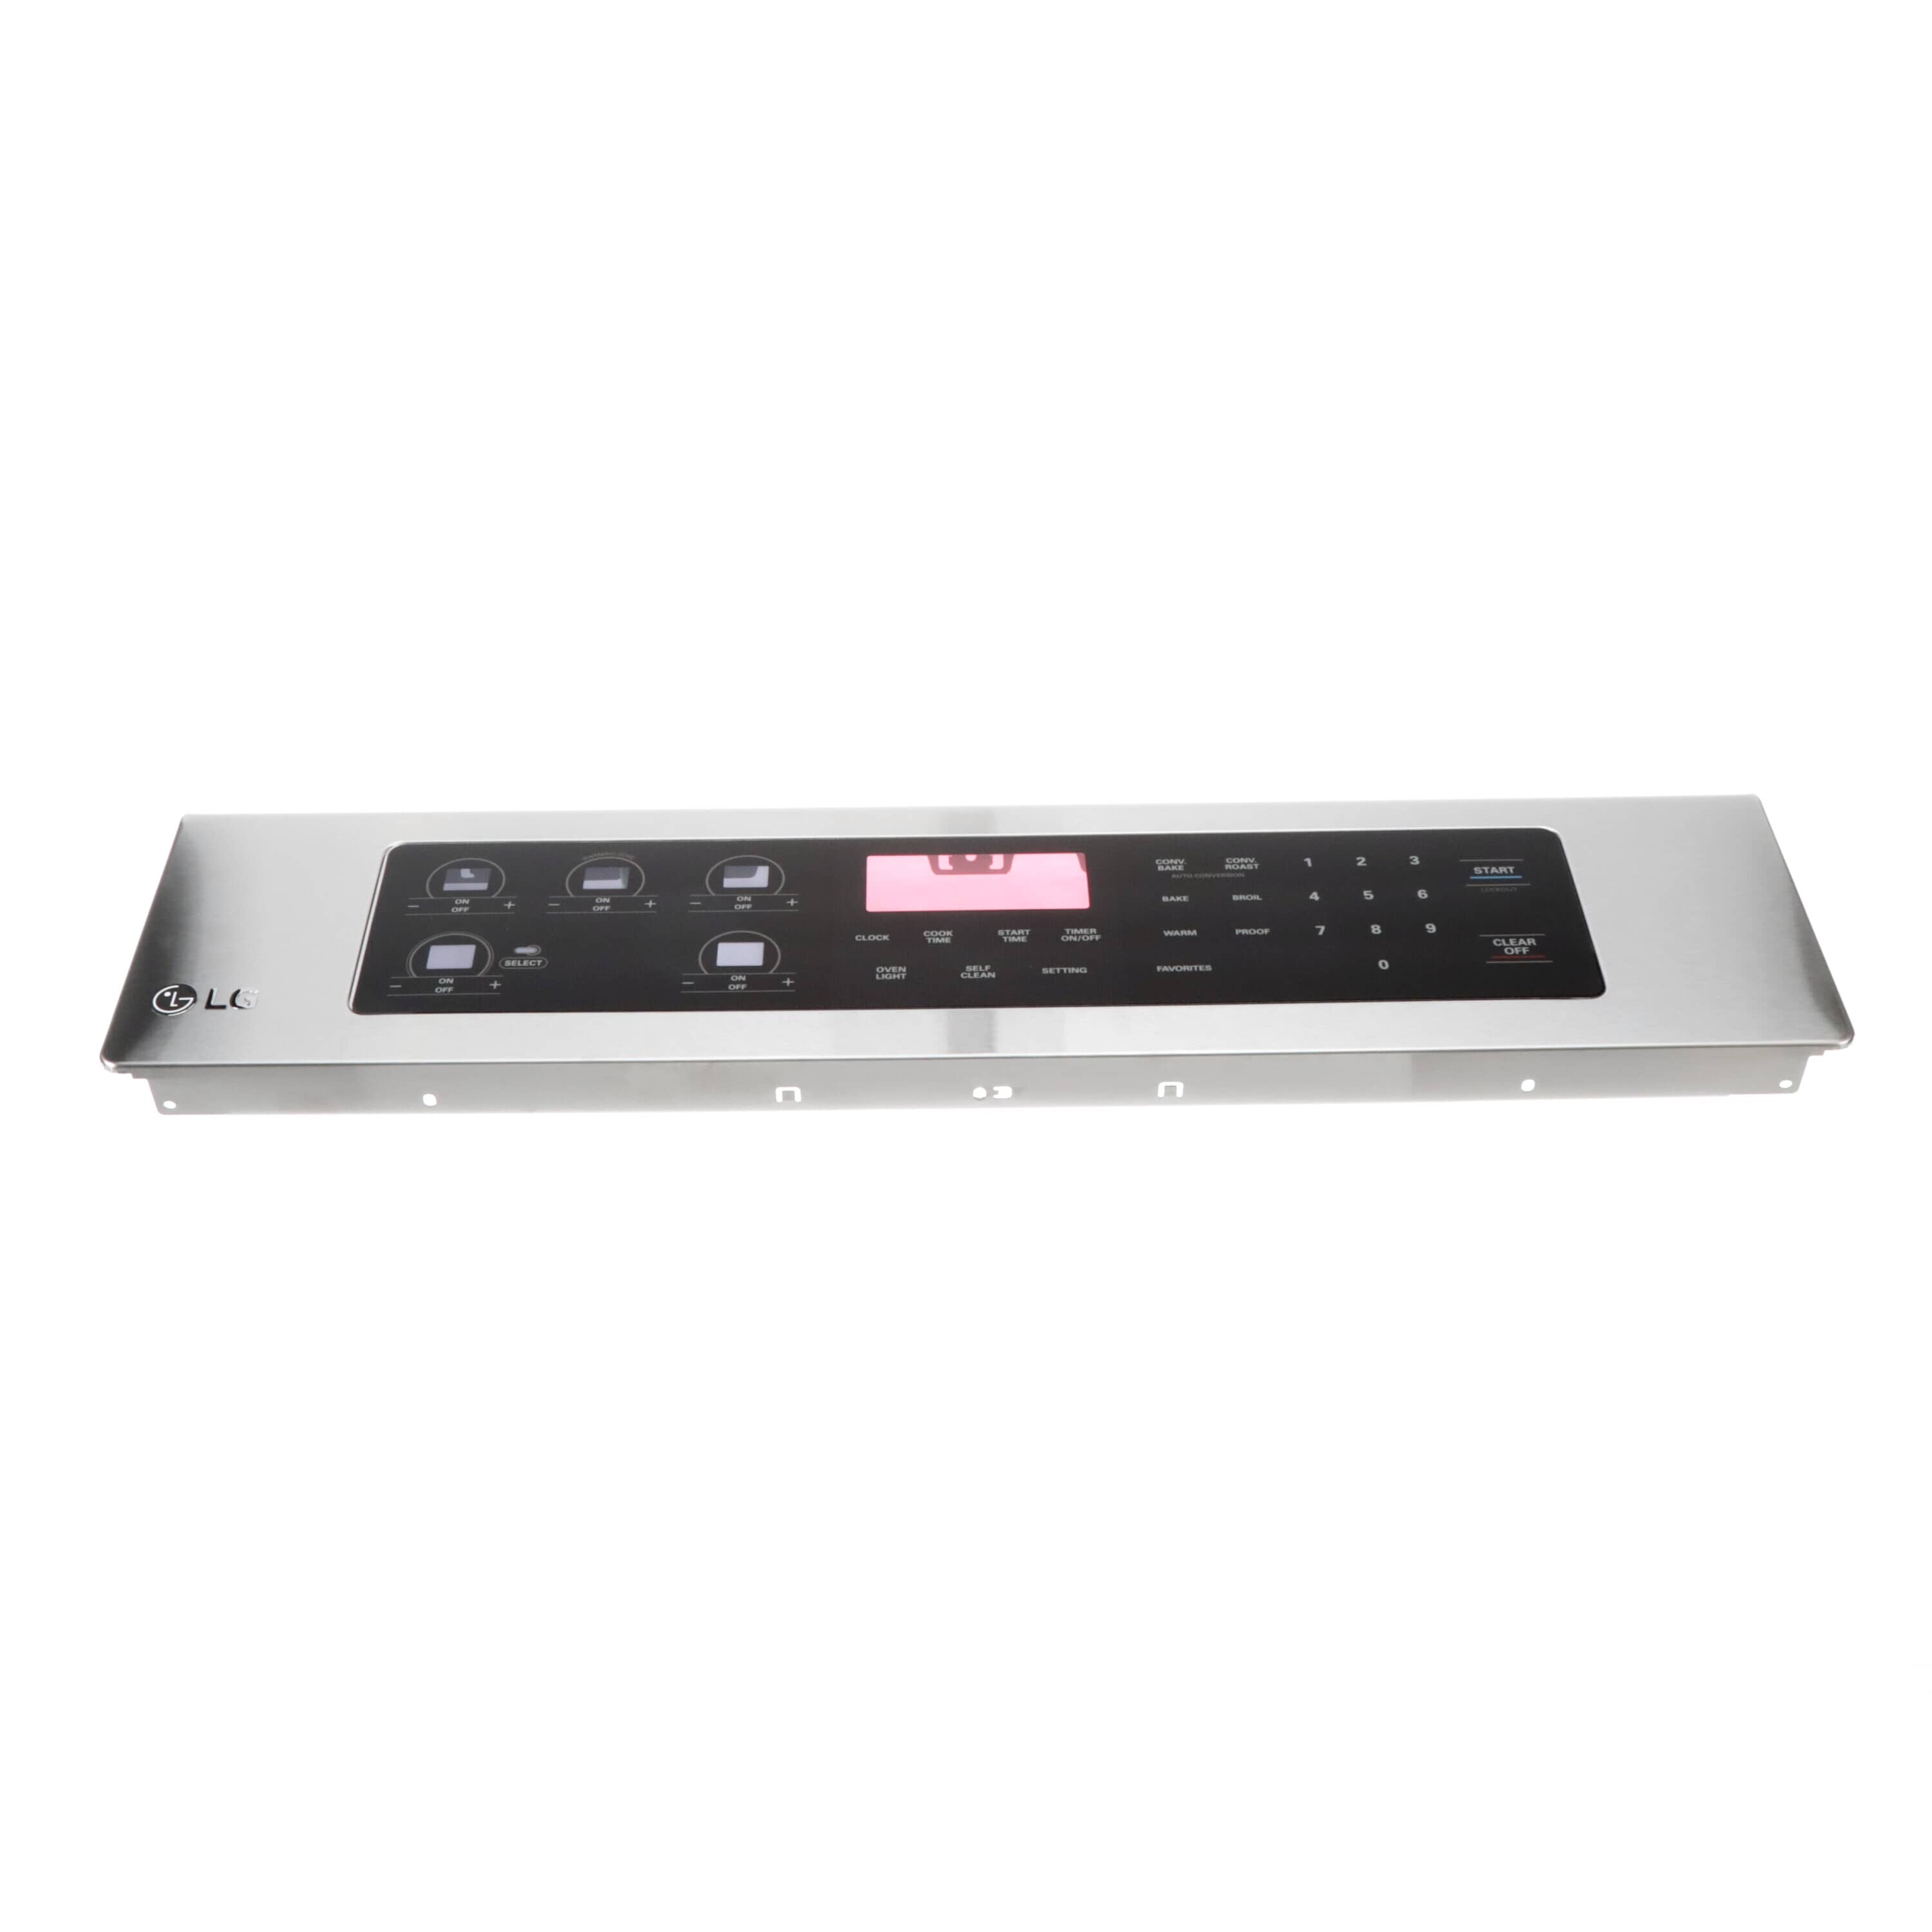 LG AGM73551615 Range Touch Control Panel